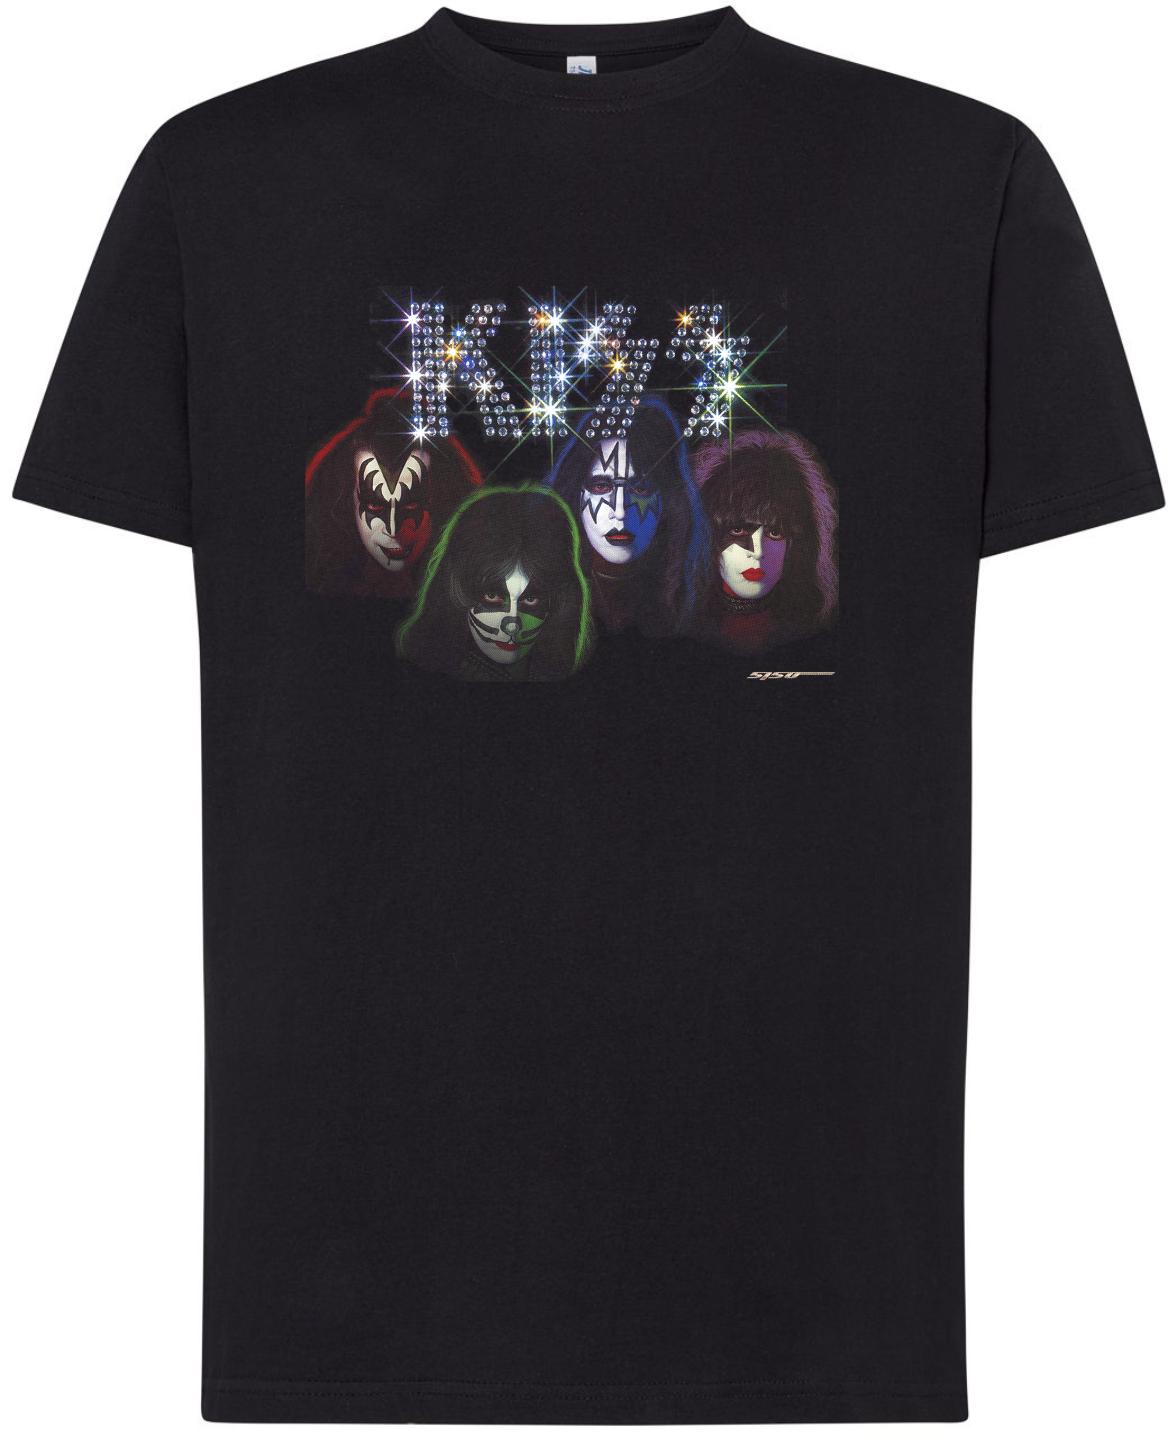 Camiseta Kiss